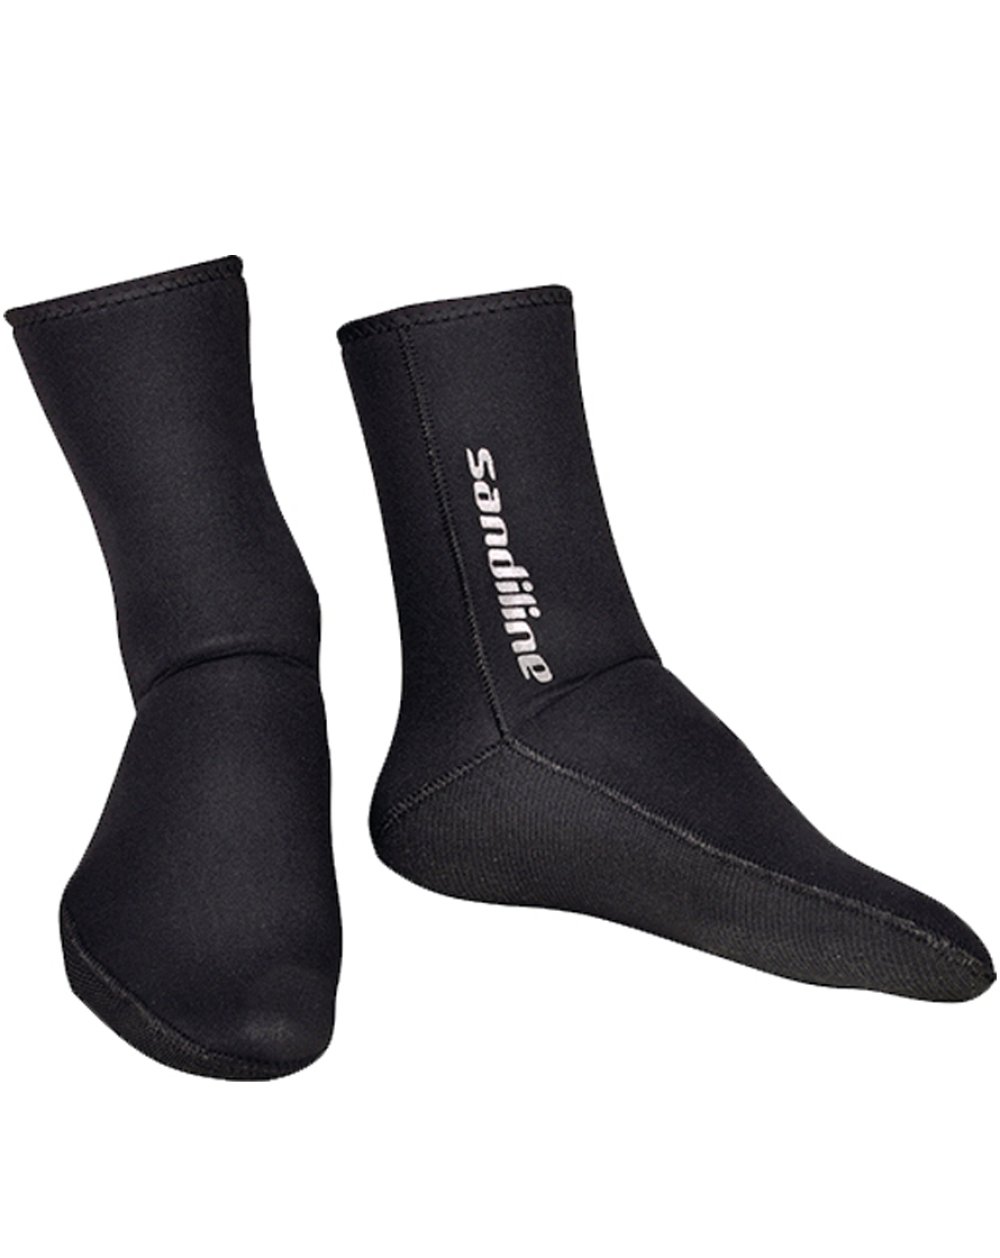 SANDILINE Socks Splash 30 - Gr. 48/49